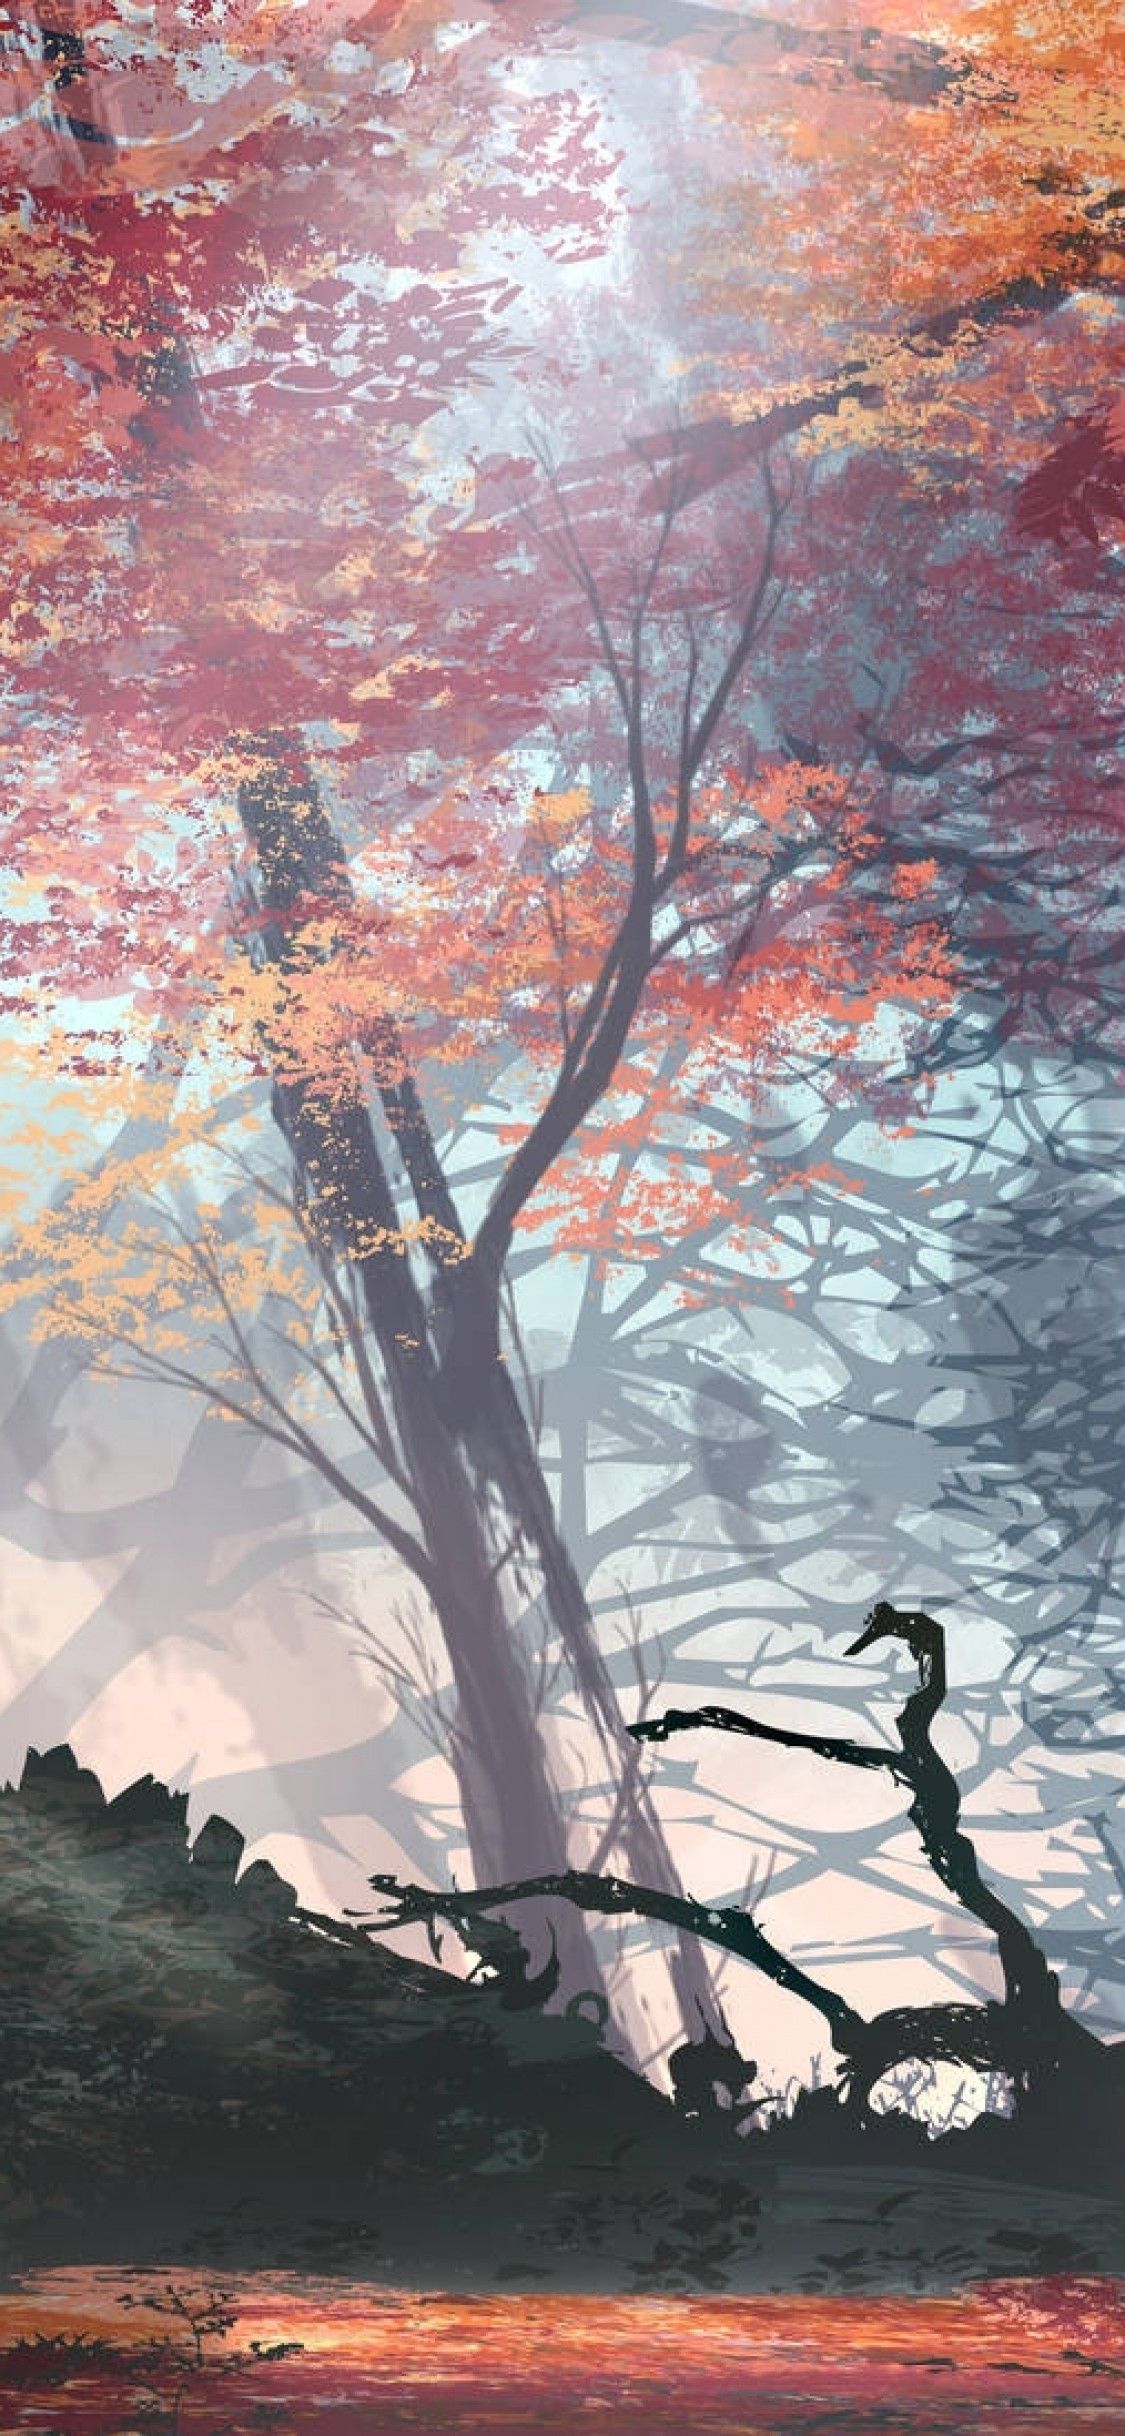 Download 1125x2436 Anime Man, Samurai, Autumn, Scenic, Forest